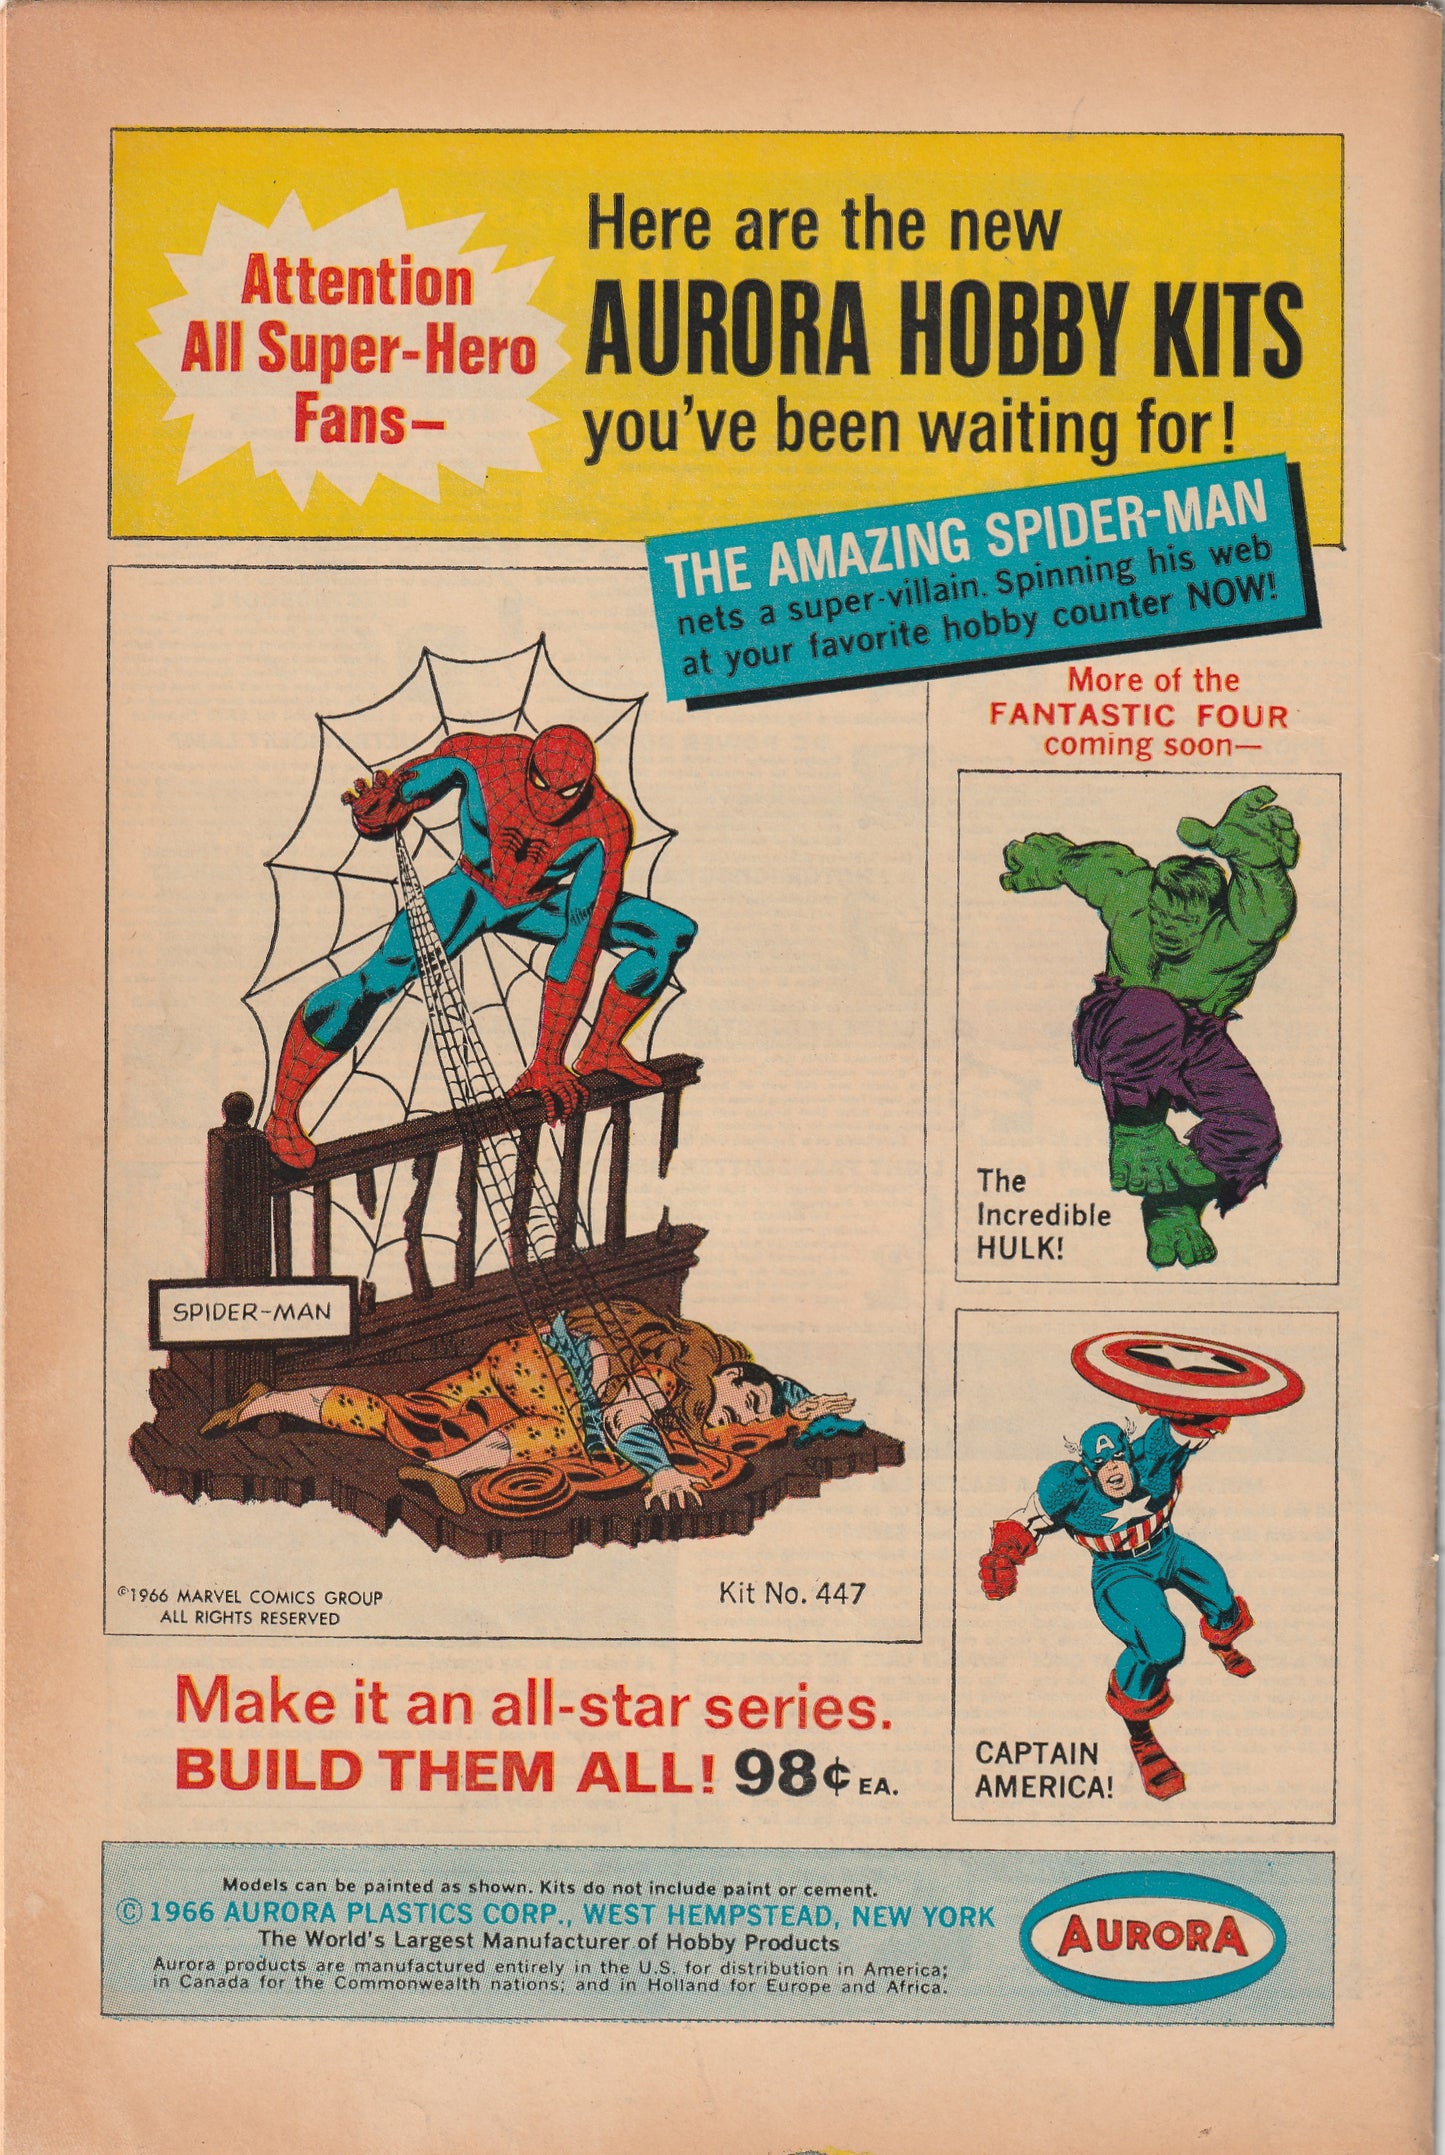 Daredevil #23 (1966) - 1st appearance 'Mike Murdock', Daredevil's fake twin brother